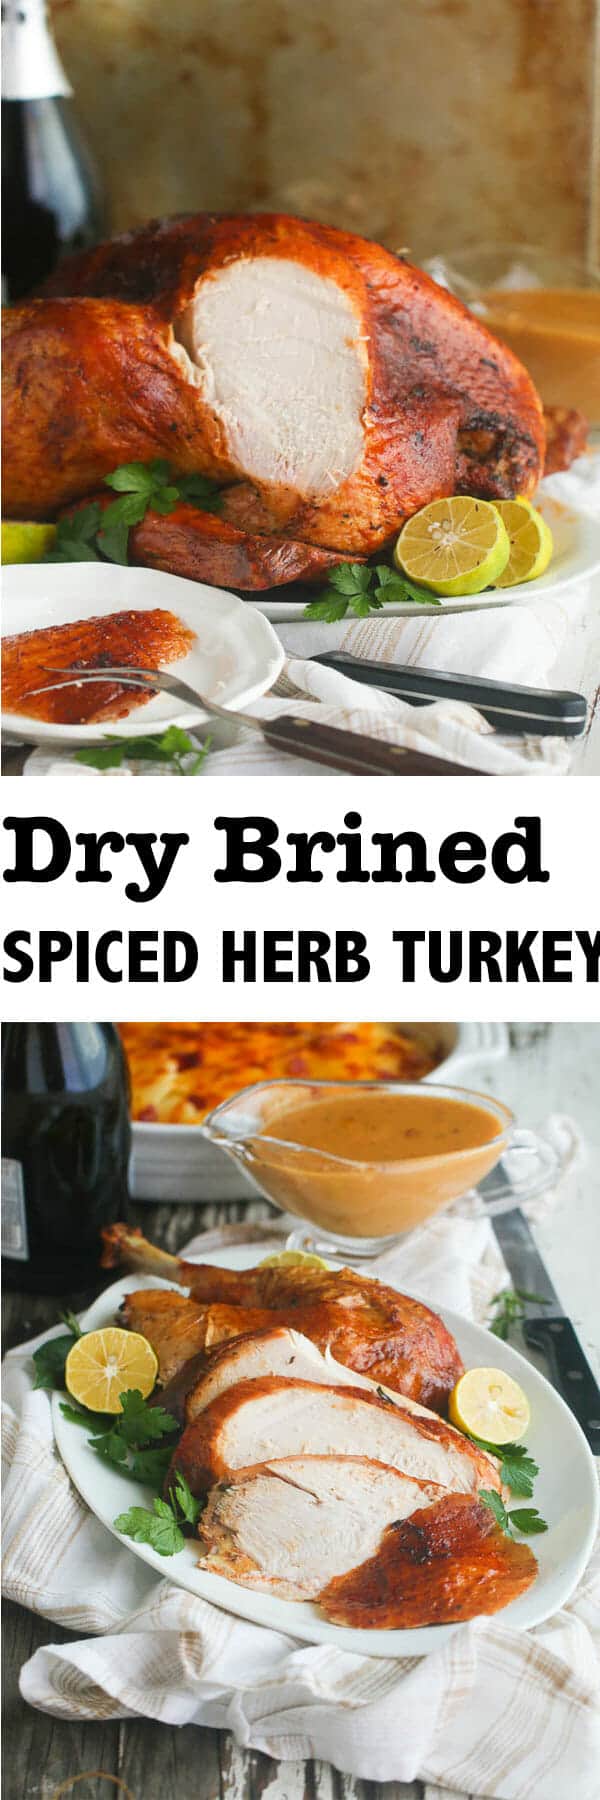 Spiced Herb Turkey